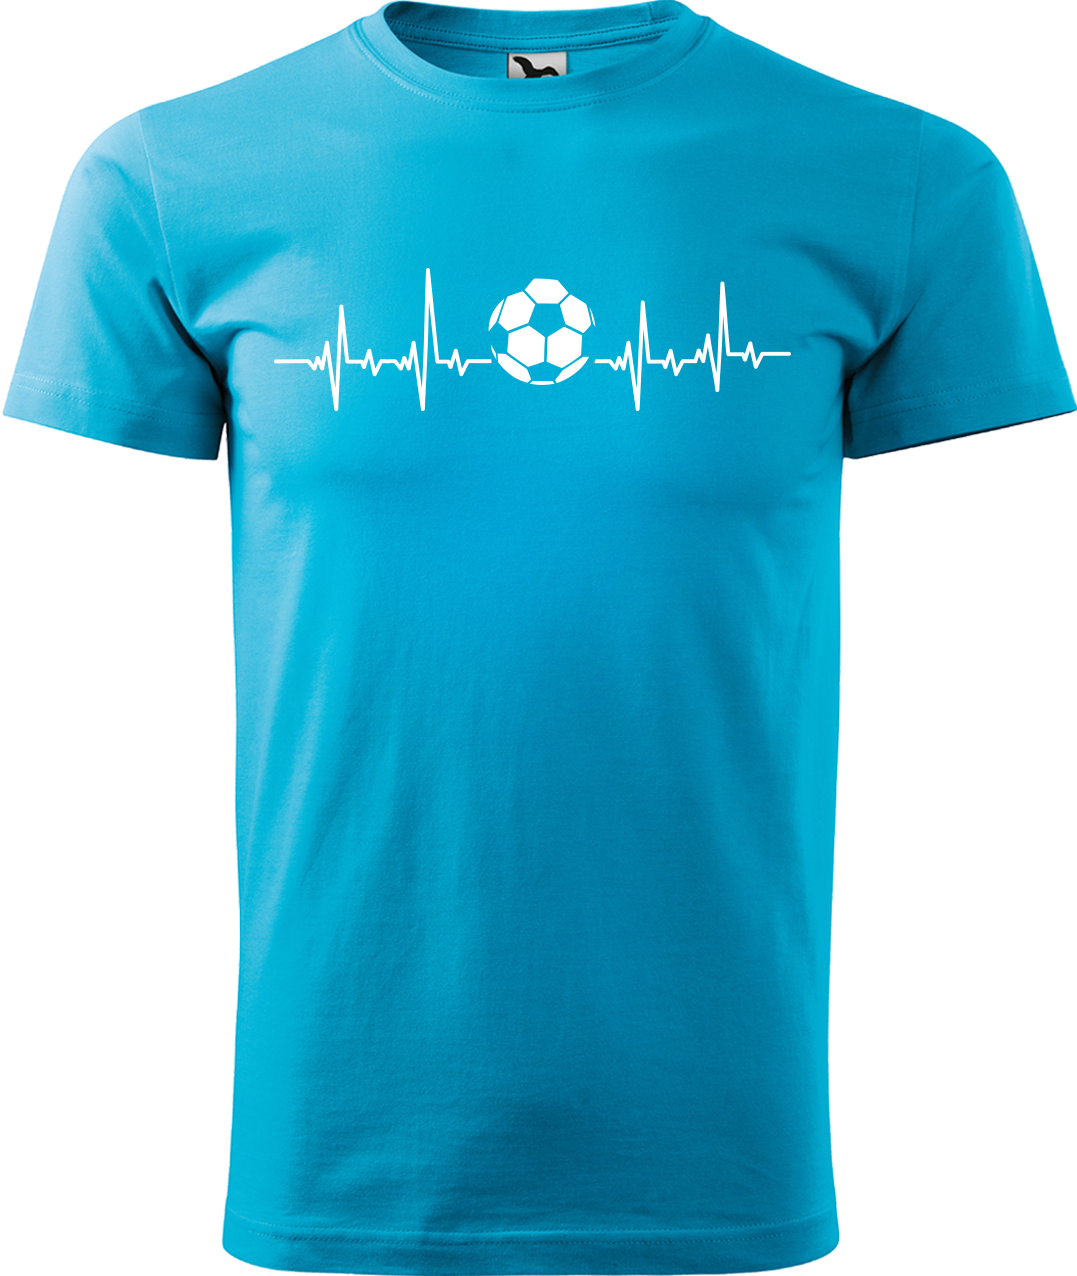 Tričko pro fotbalistu - Fotbalistův kardiogram Velikost: L, Barva: Tyrkysová (44)